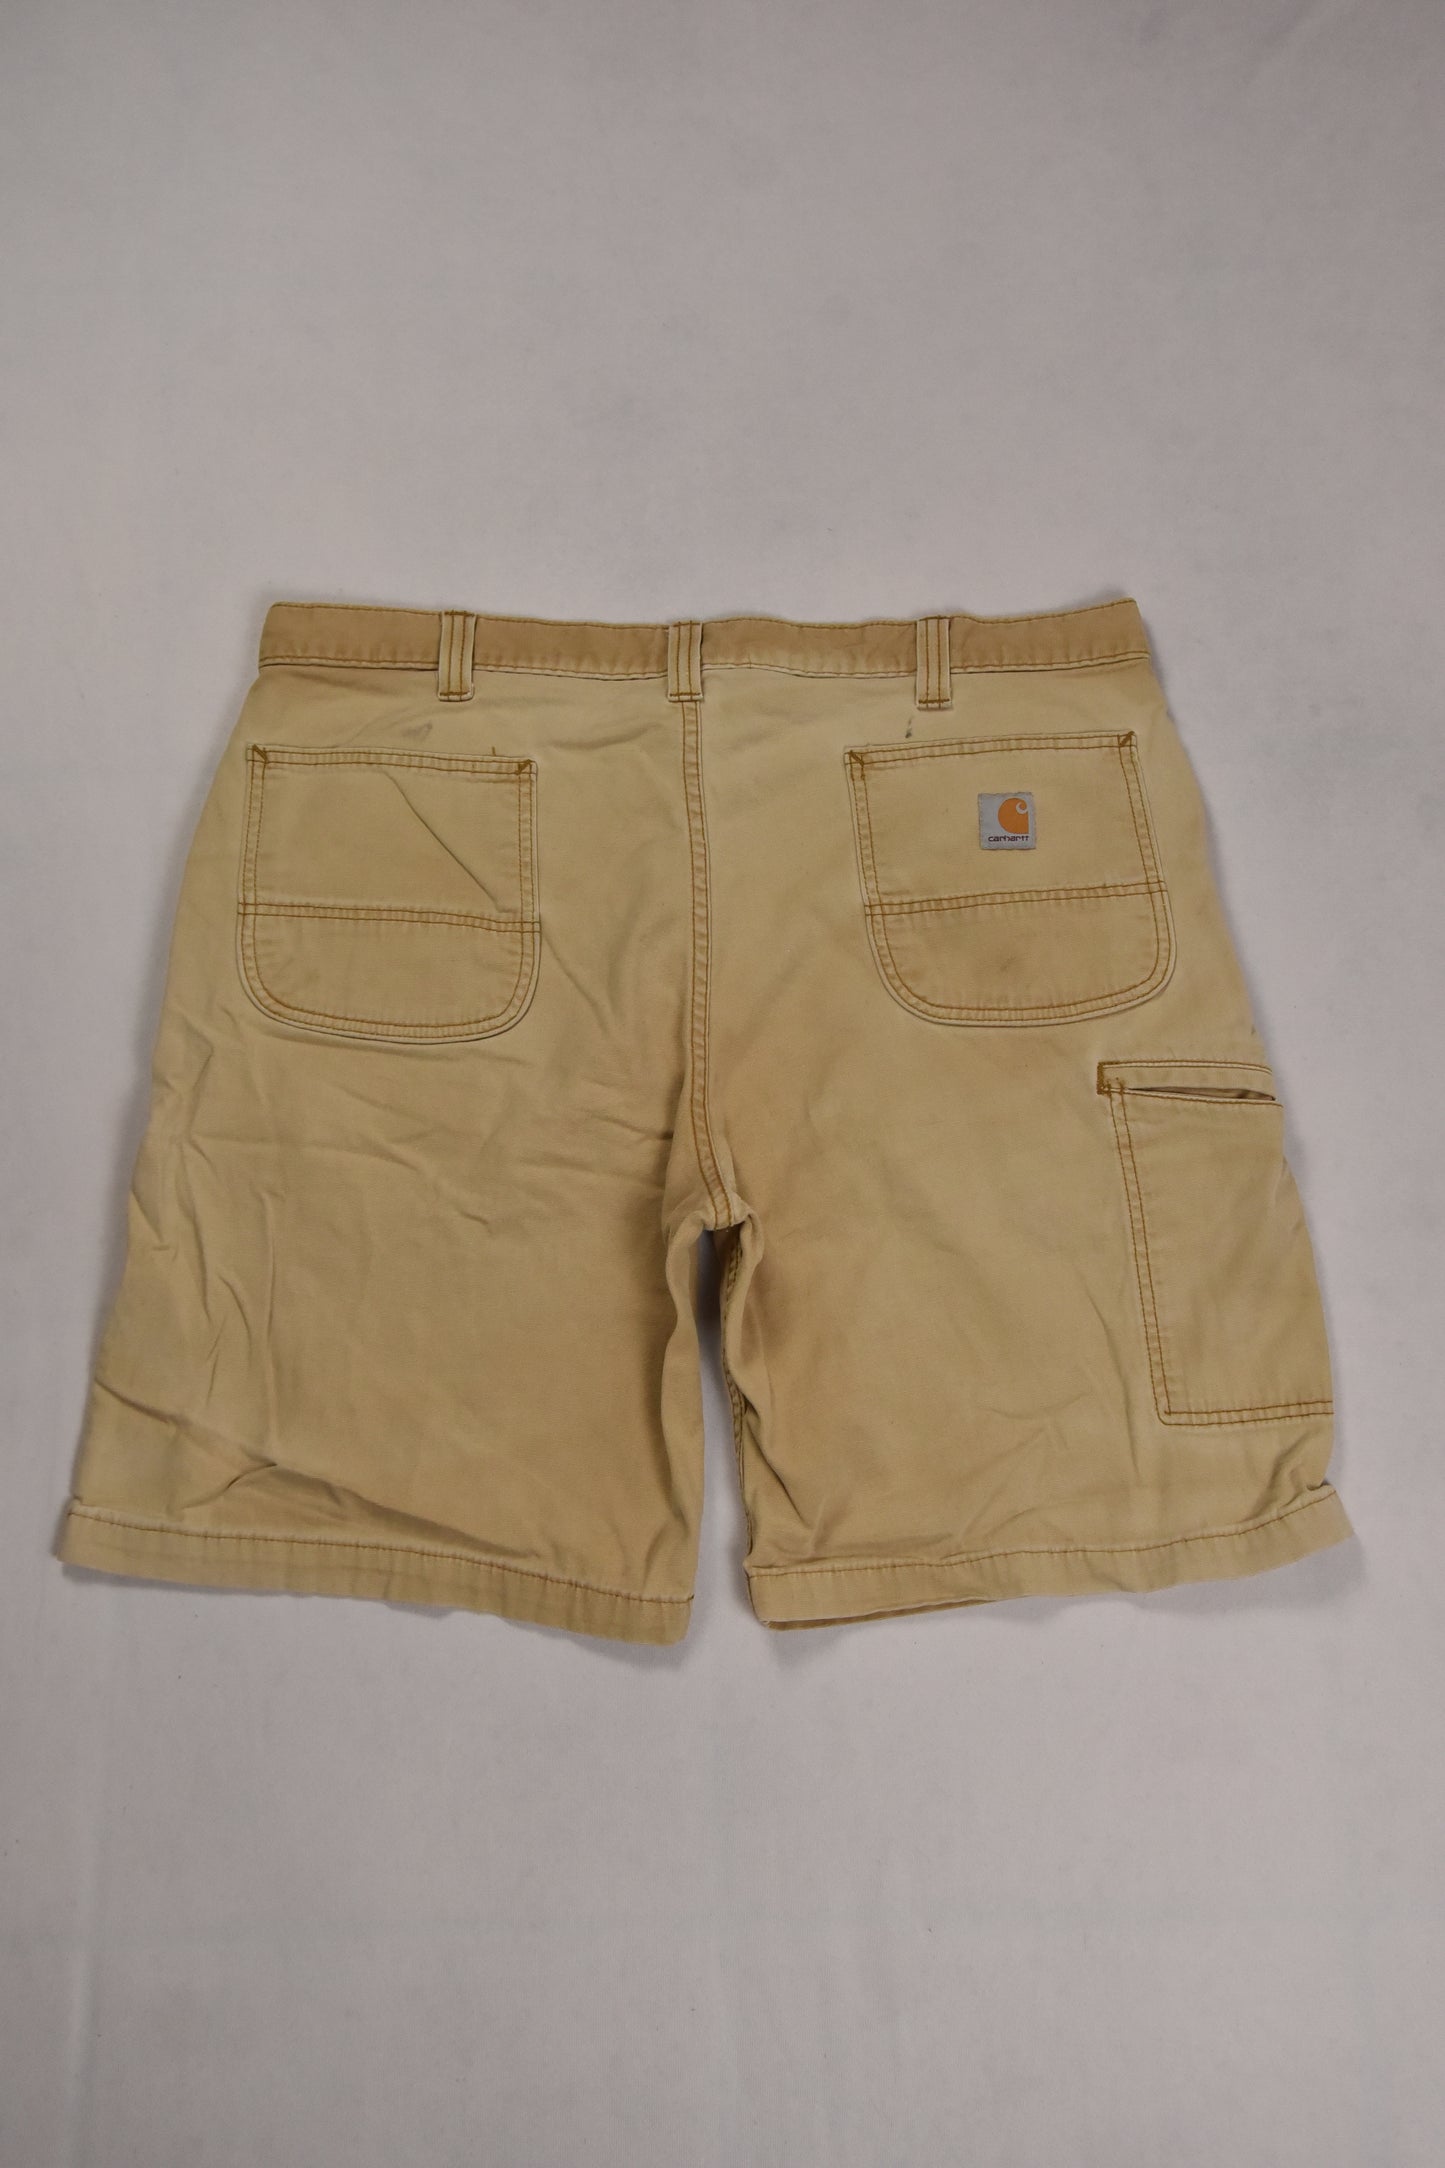 Carhartt short workwear pants vintage / 40